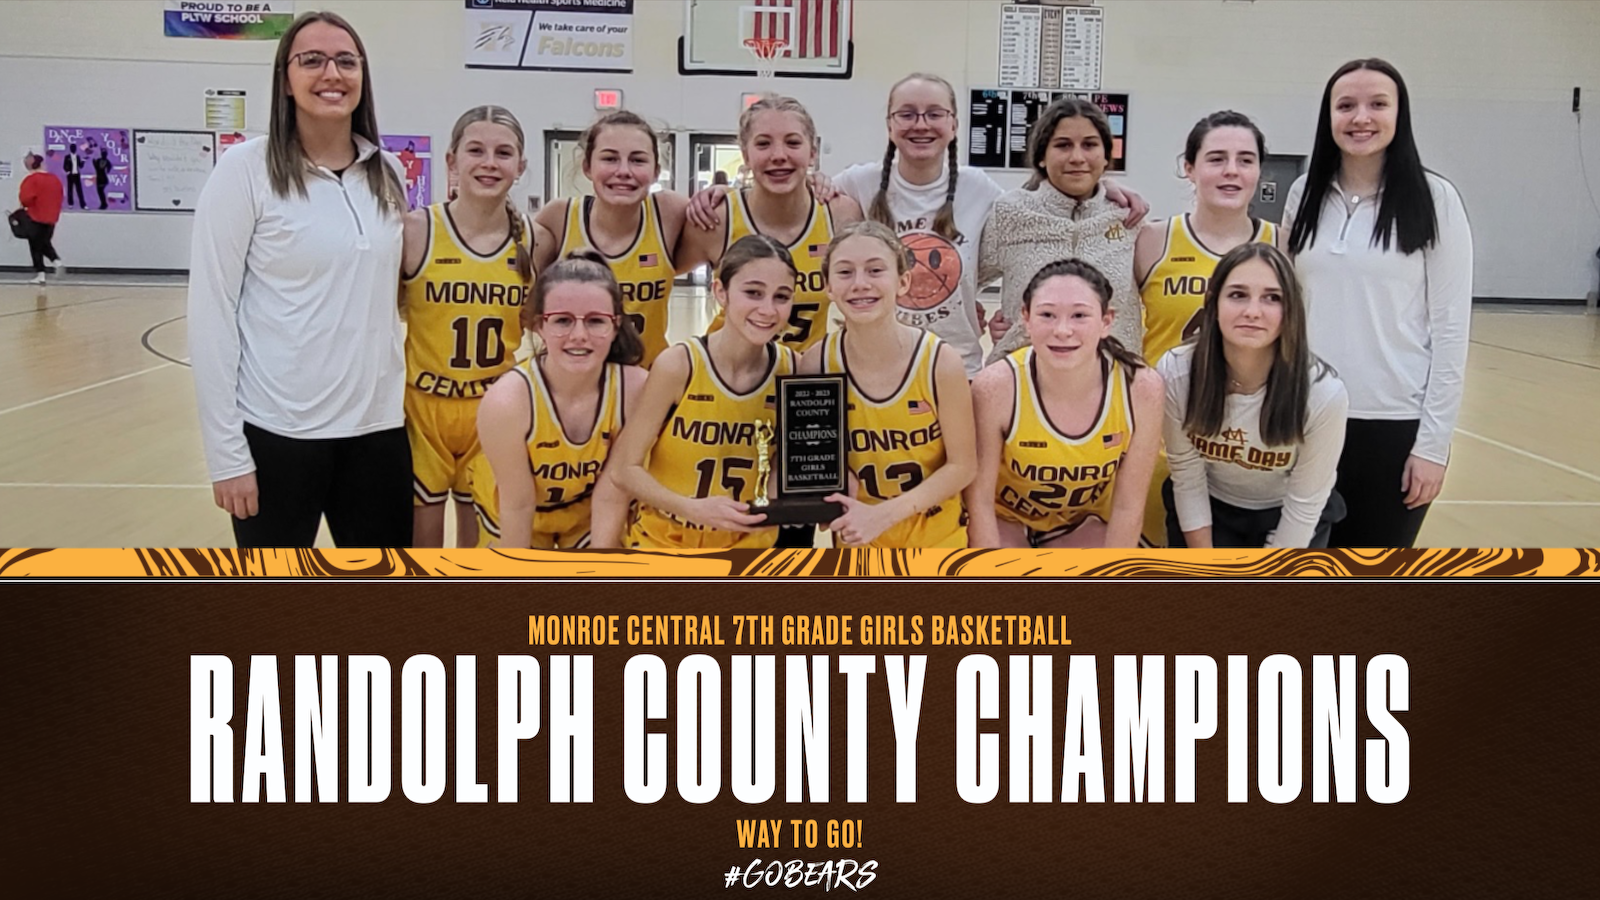 7th Grade Girls Basketball win the Randolph County Championship cover photo